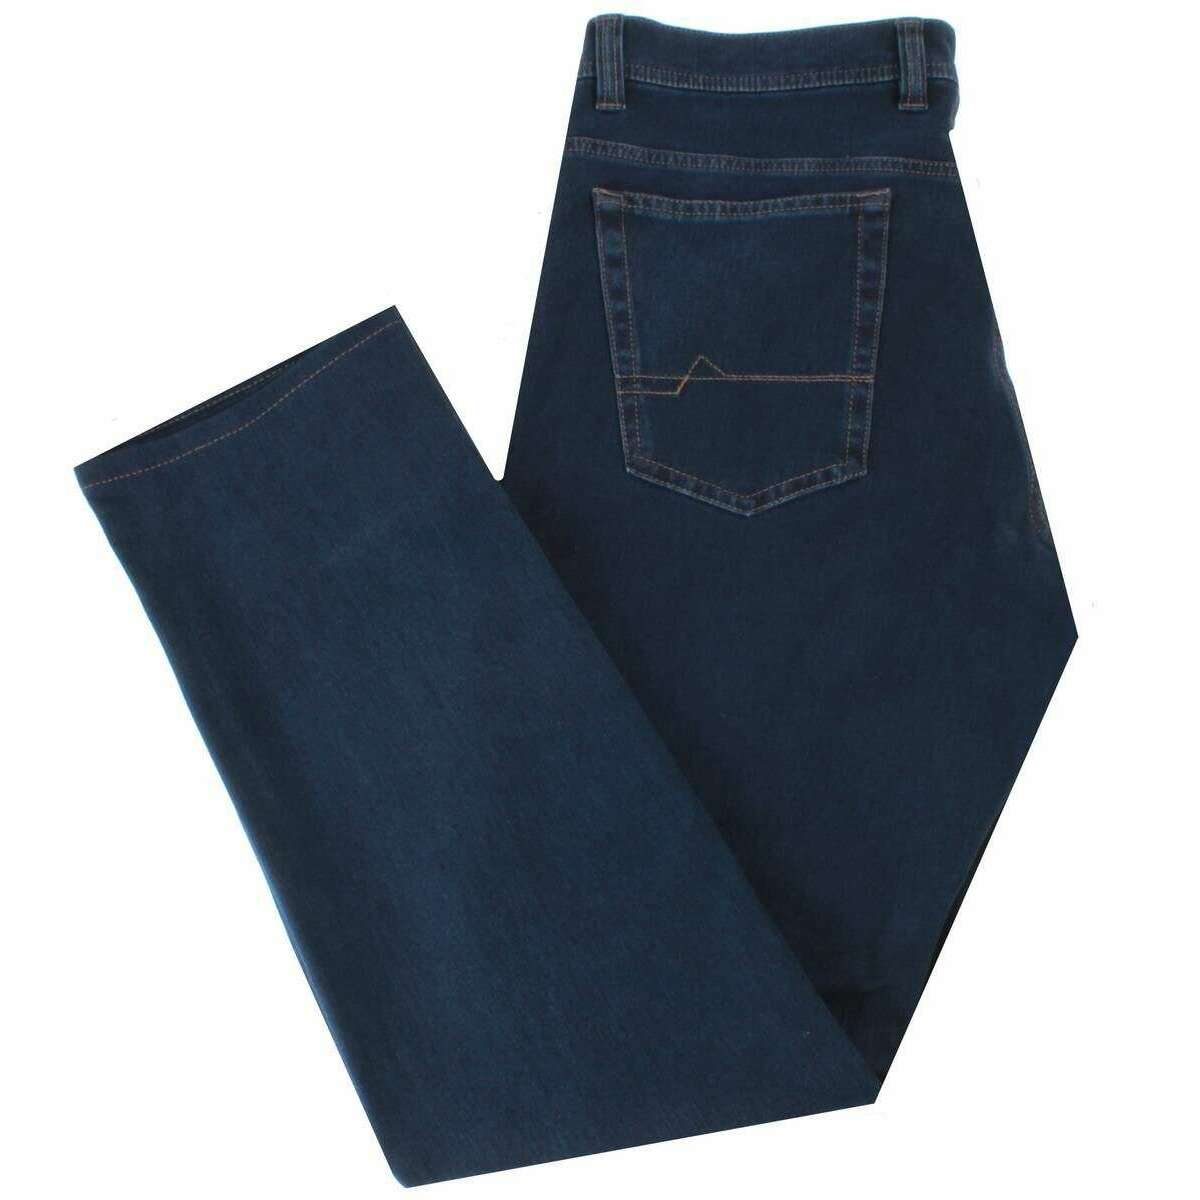 BRUHL York DO Slim Fitting Jeans - Dark Blue